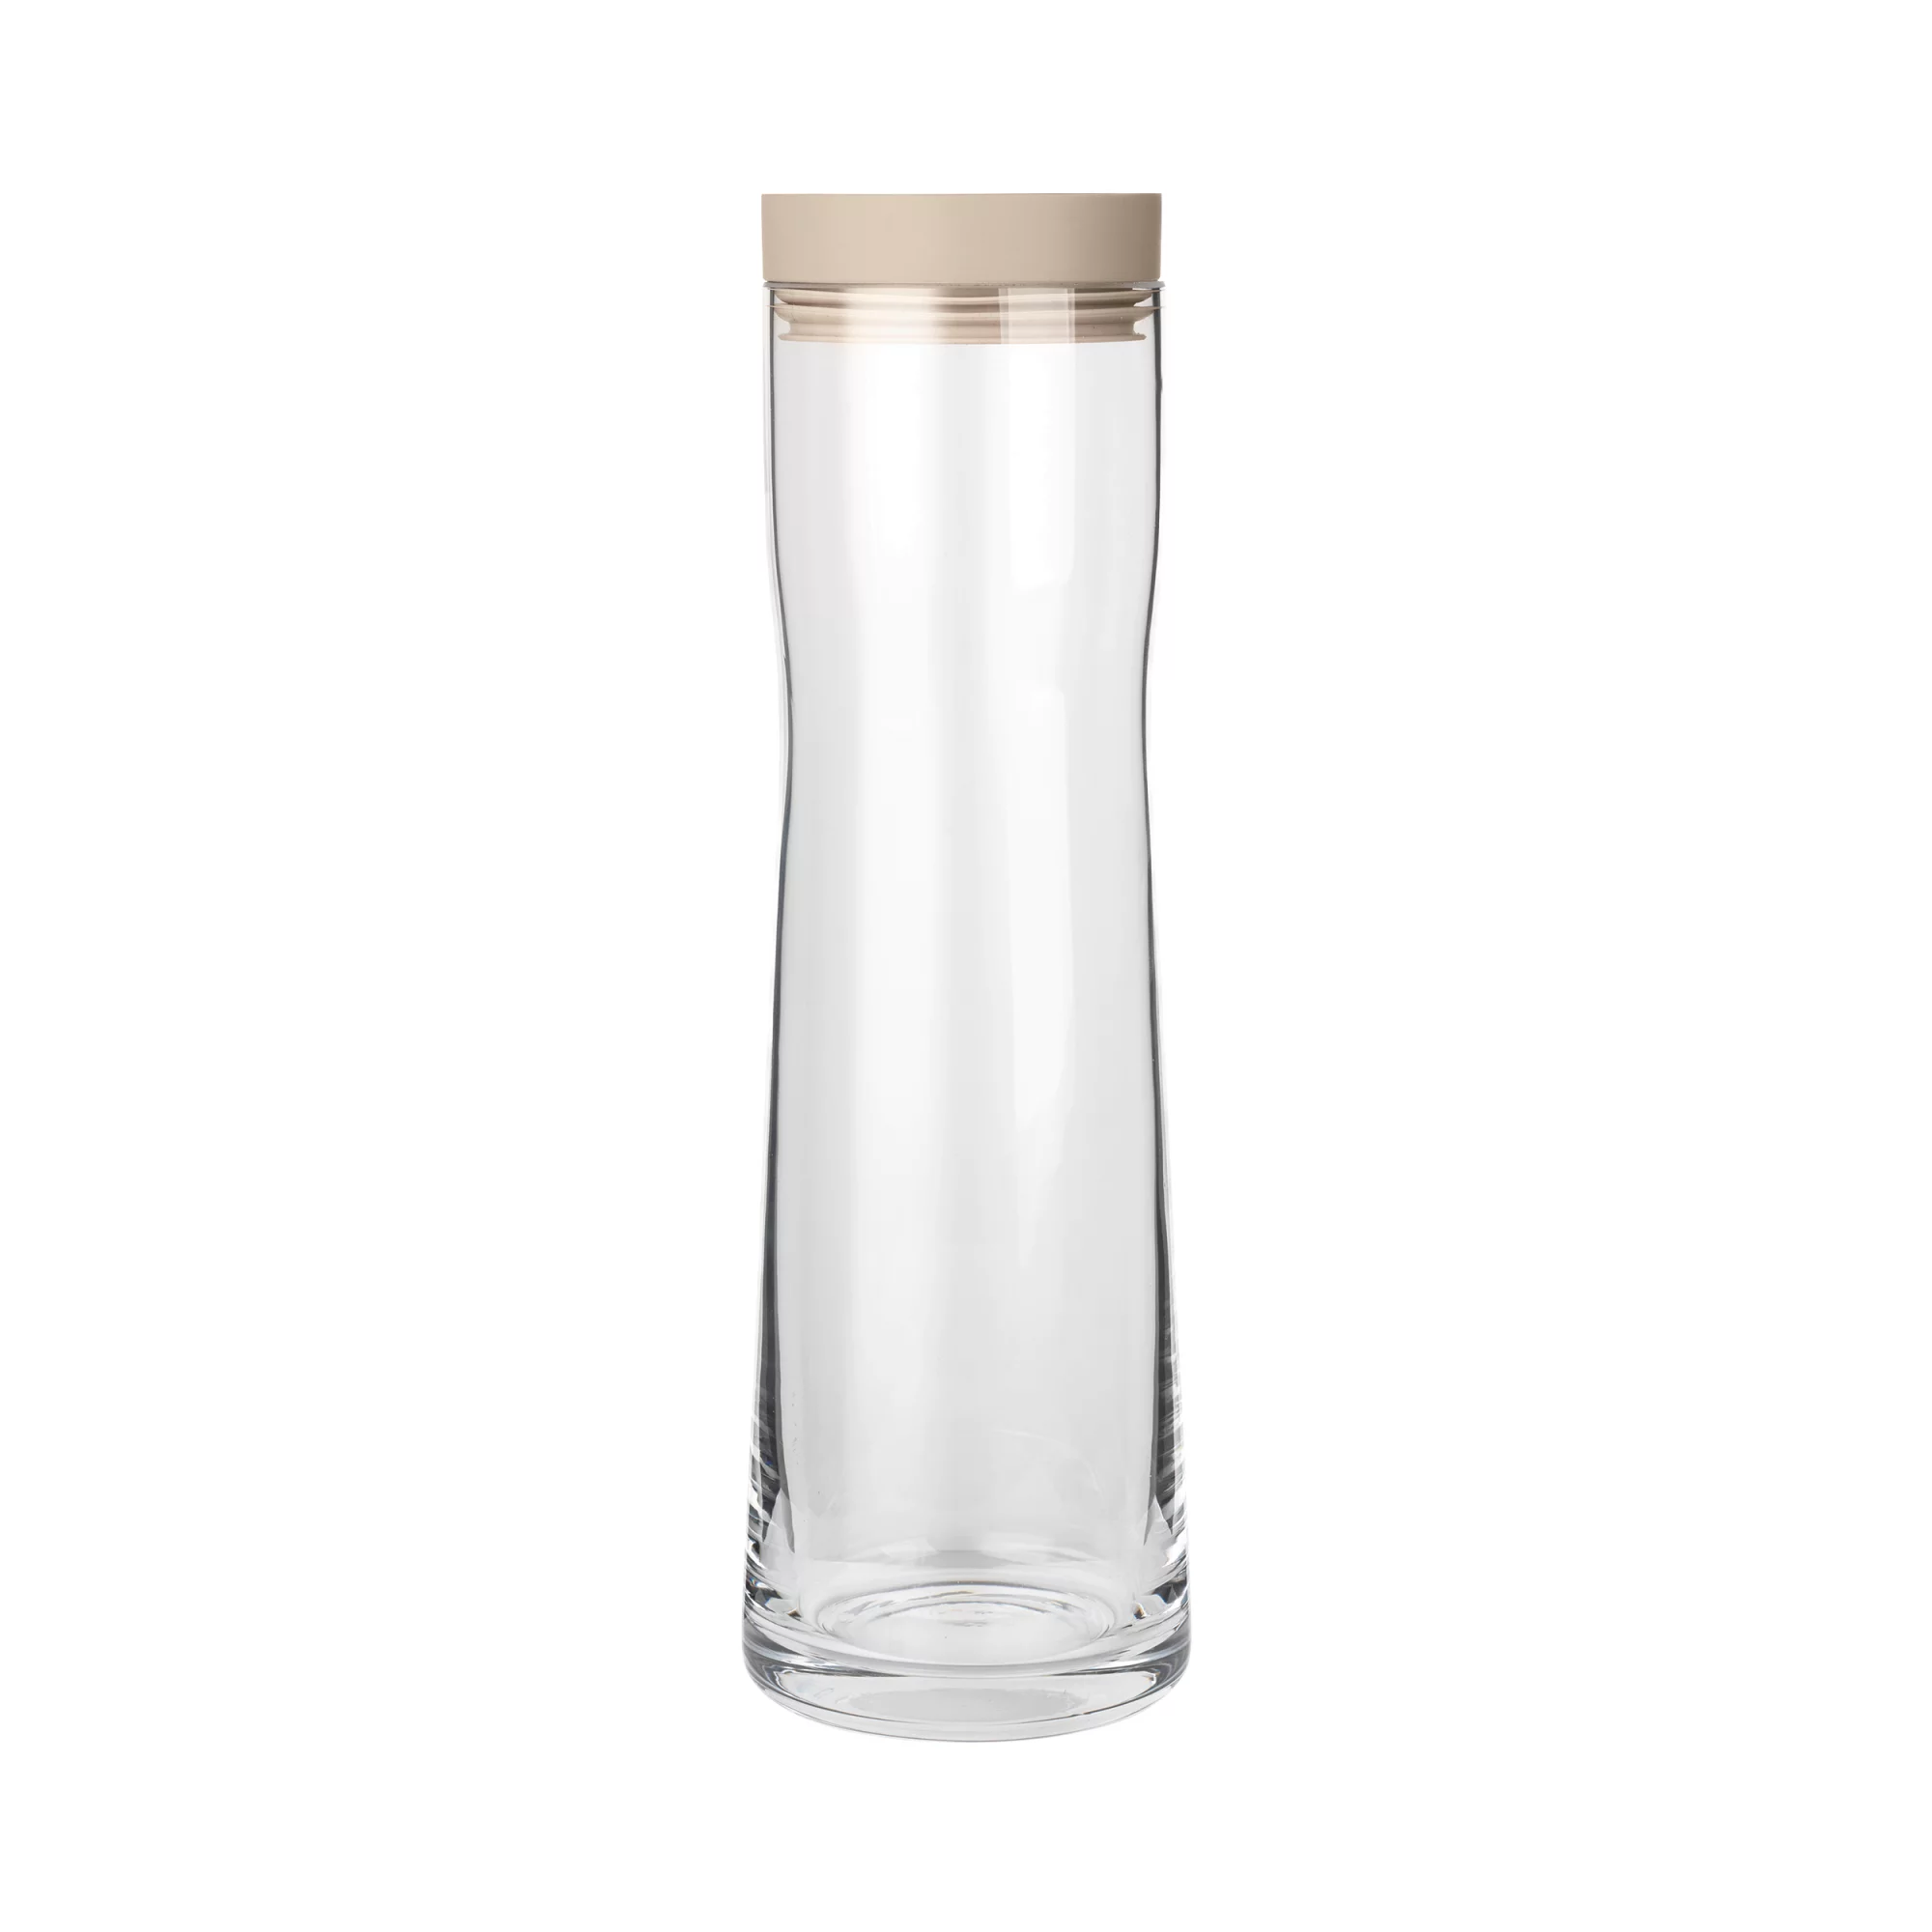 Blomus SPLASH Wasserkaraffe Karaffe Krug Edelstahl Glas Silikon schwarz 1 L 